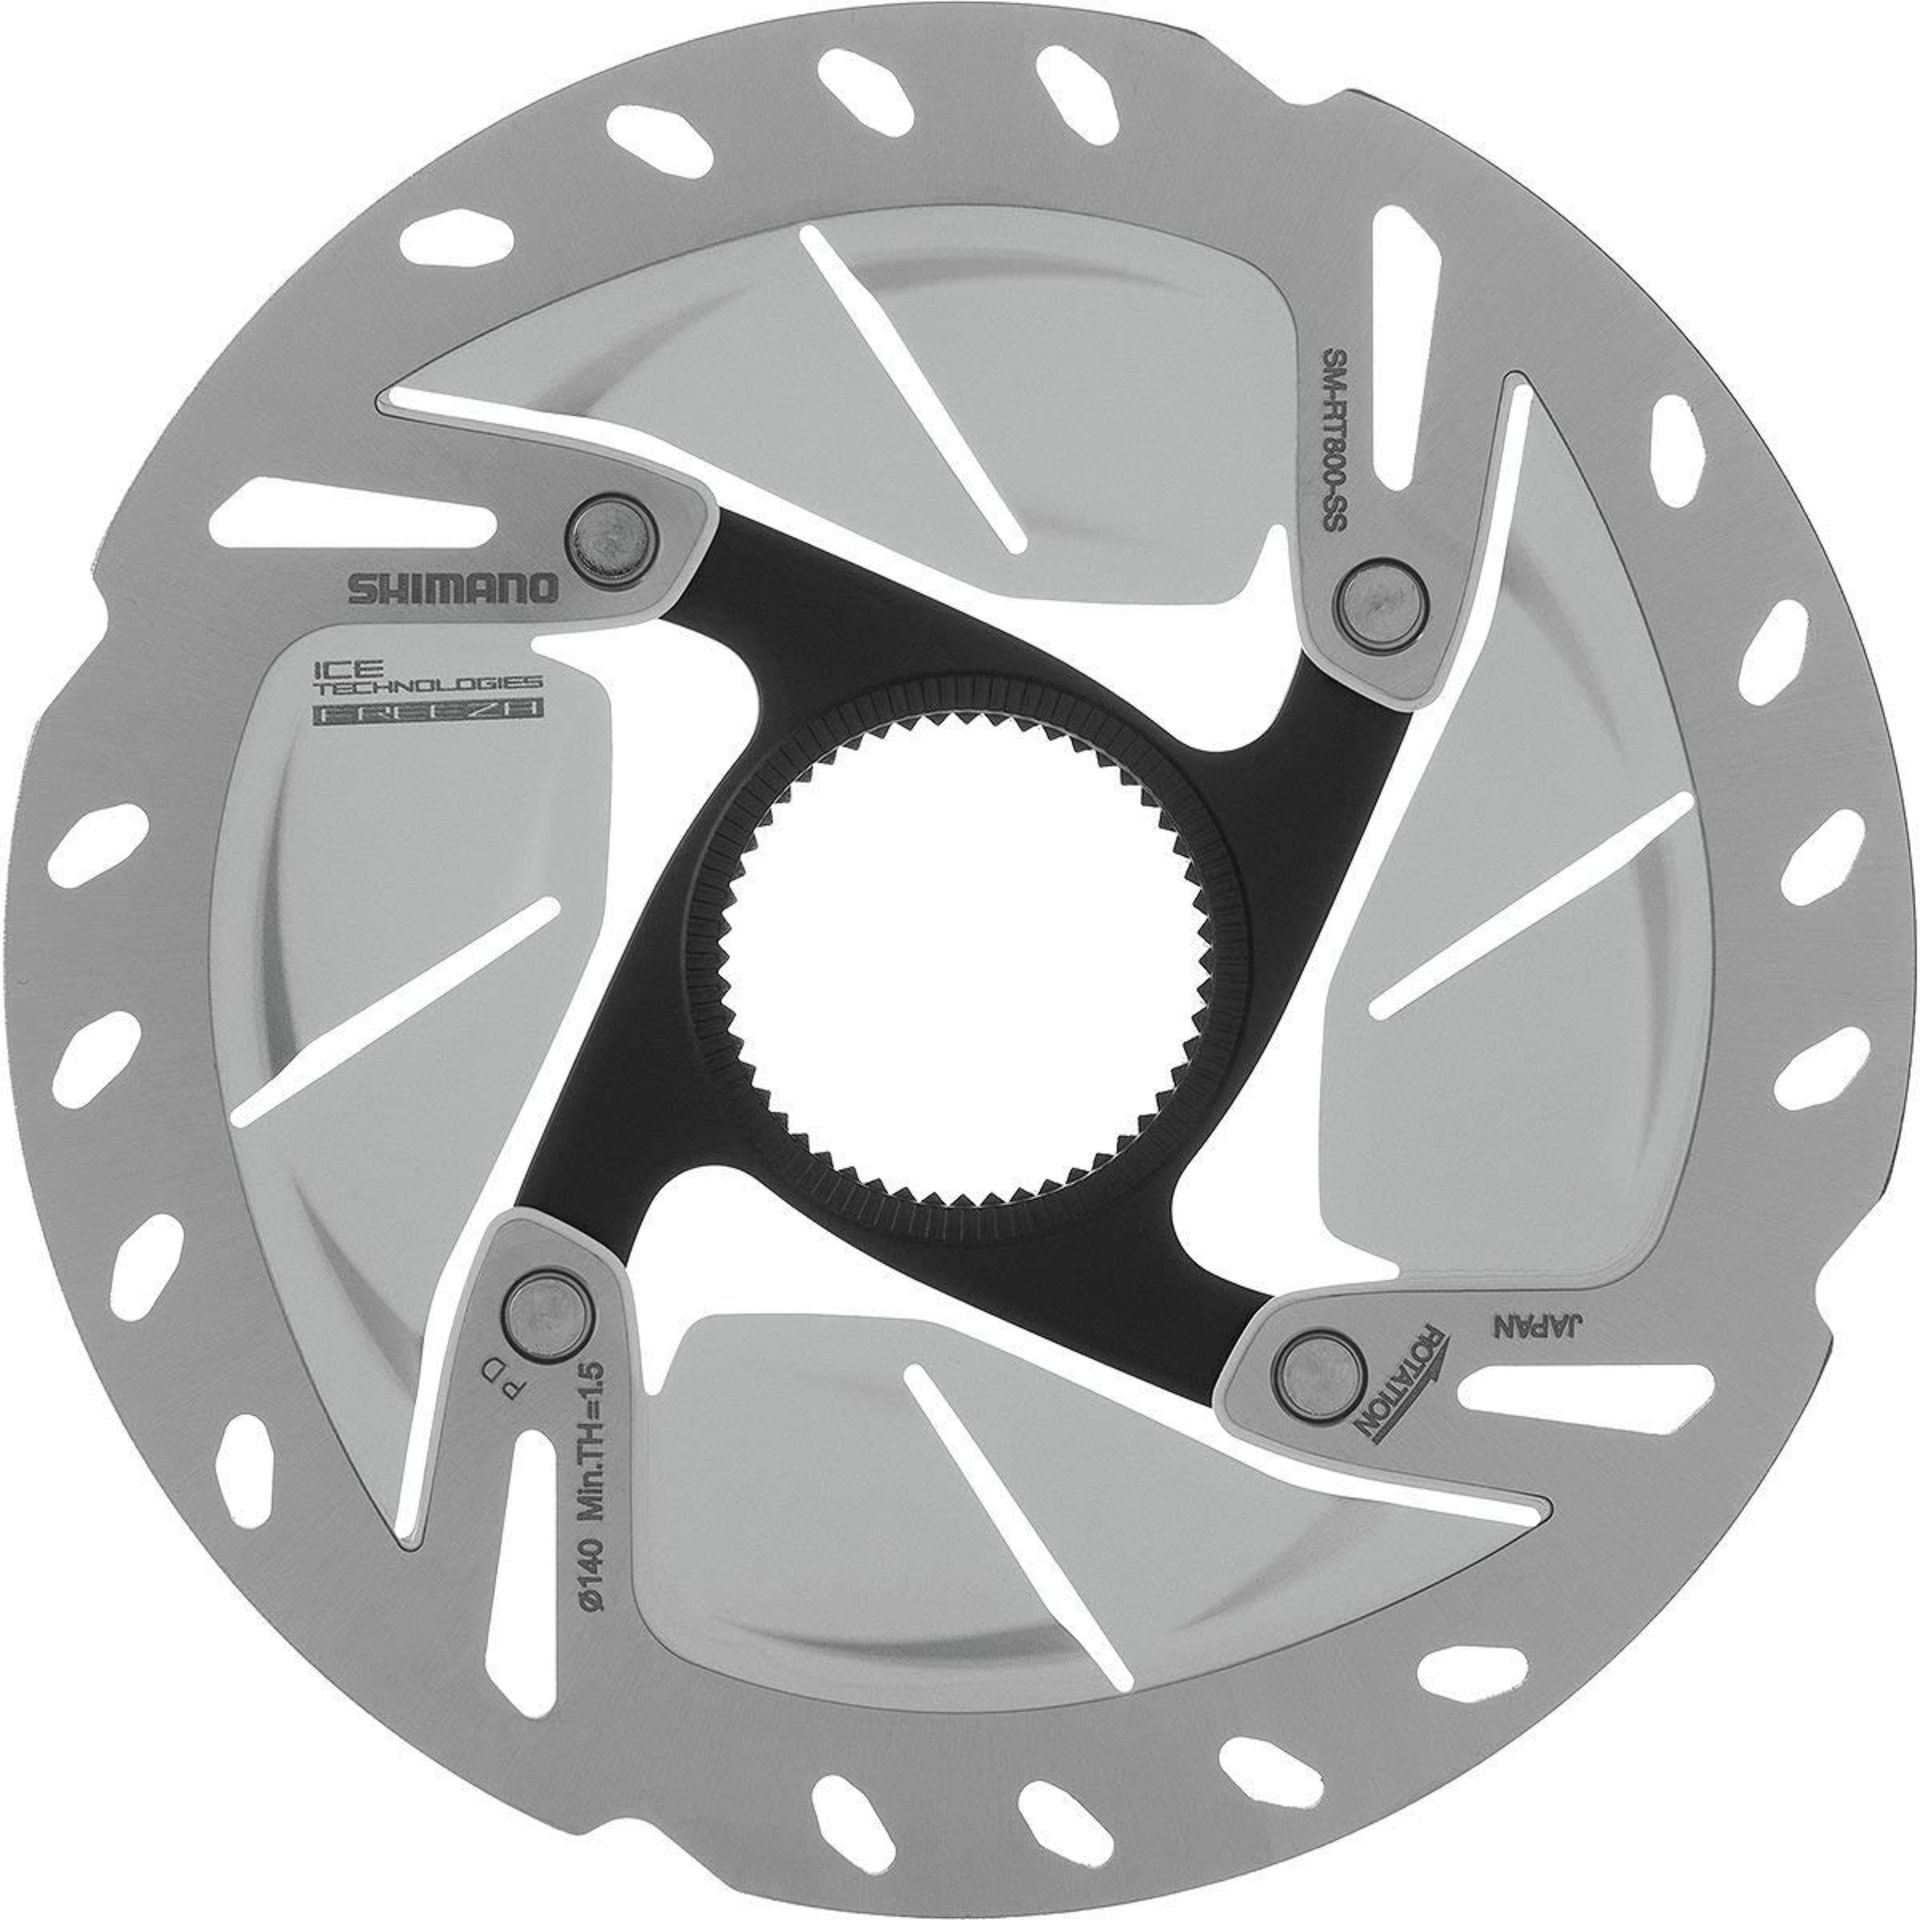 4 x Shimano Brake Discs & Rotors | See Description for Details - Bild 3 aus 4